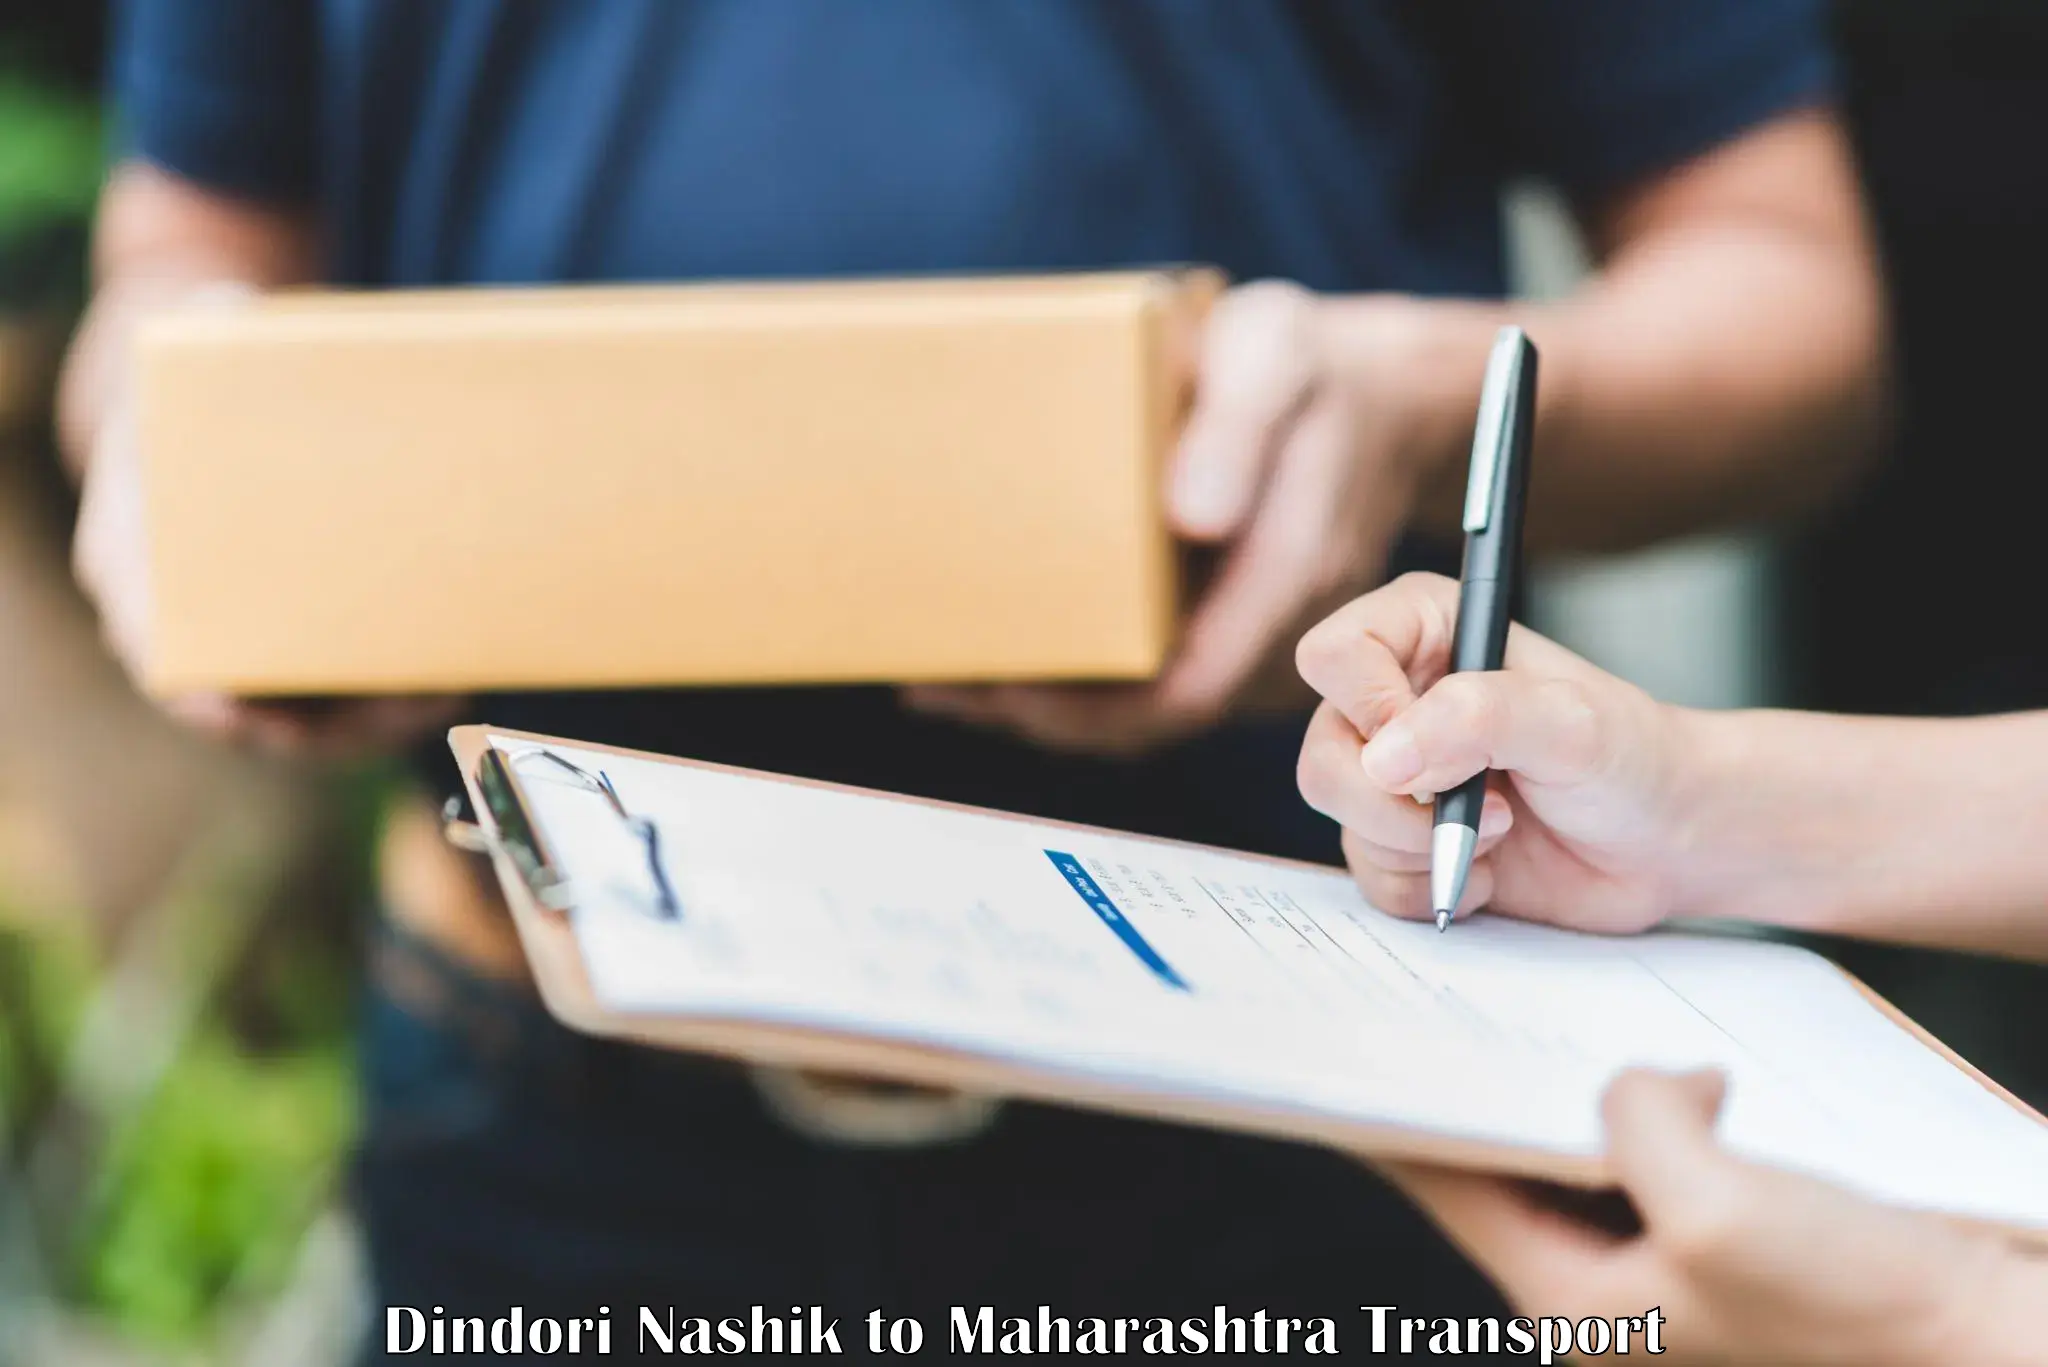 Goods delivery service Dindori Nashik to Maharashtra